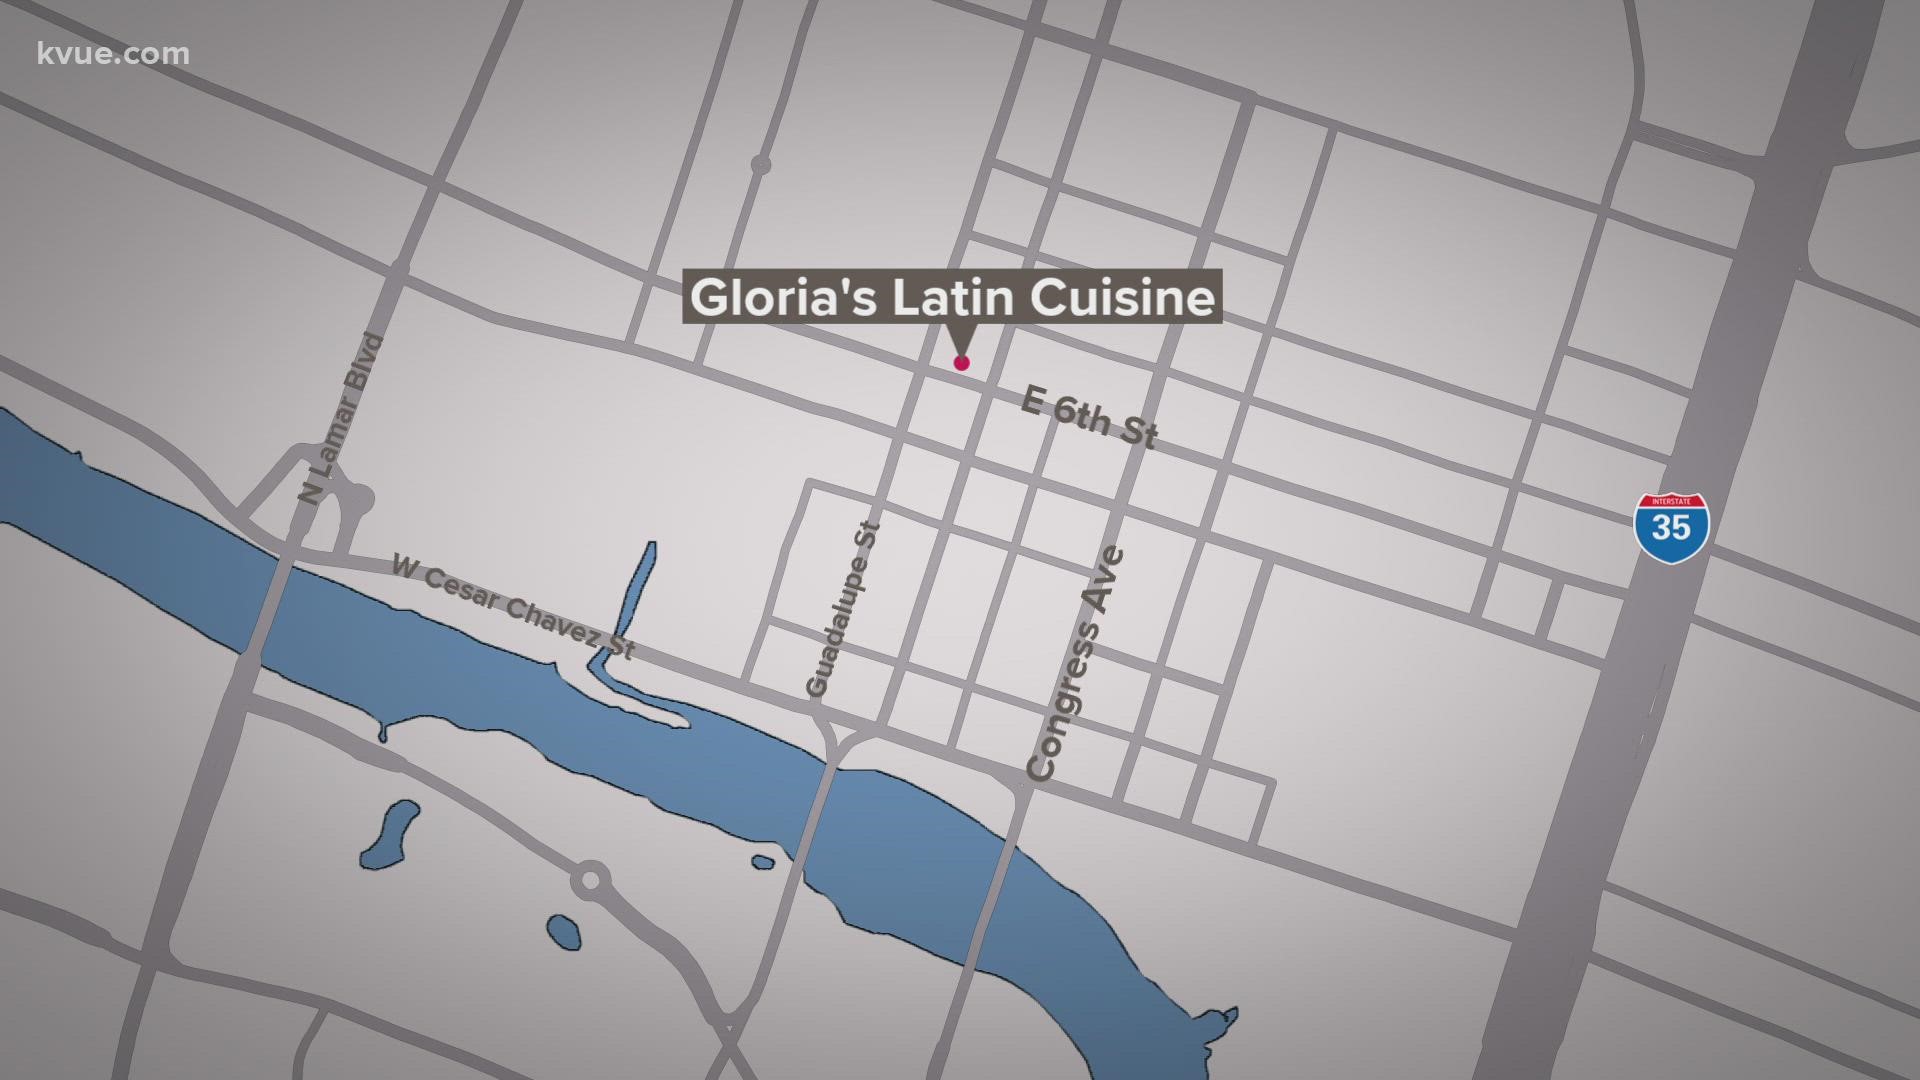 Gloria's Latin Cuisine will close its Sixth Street location on Monday.